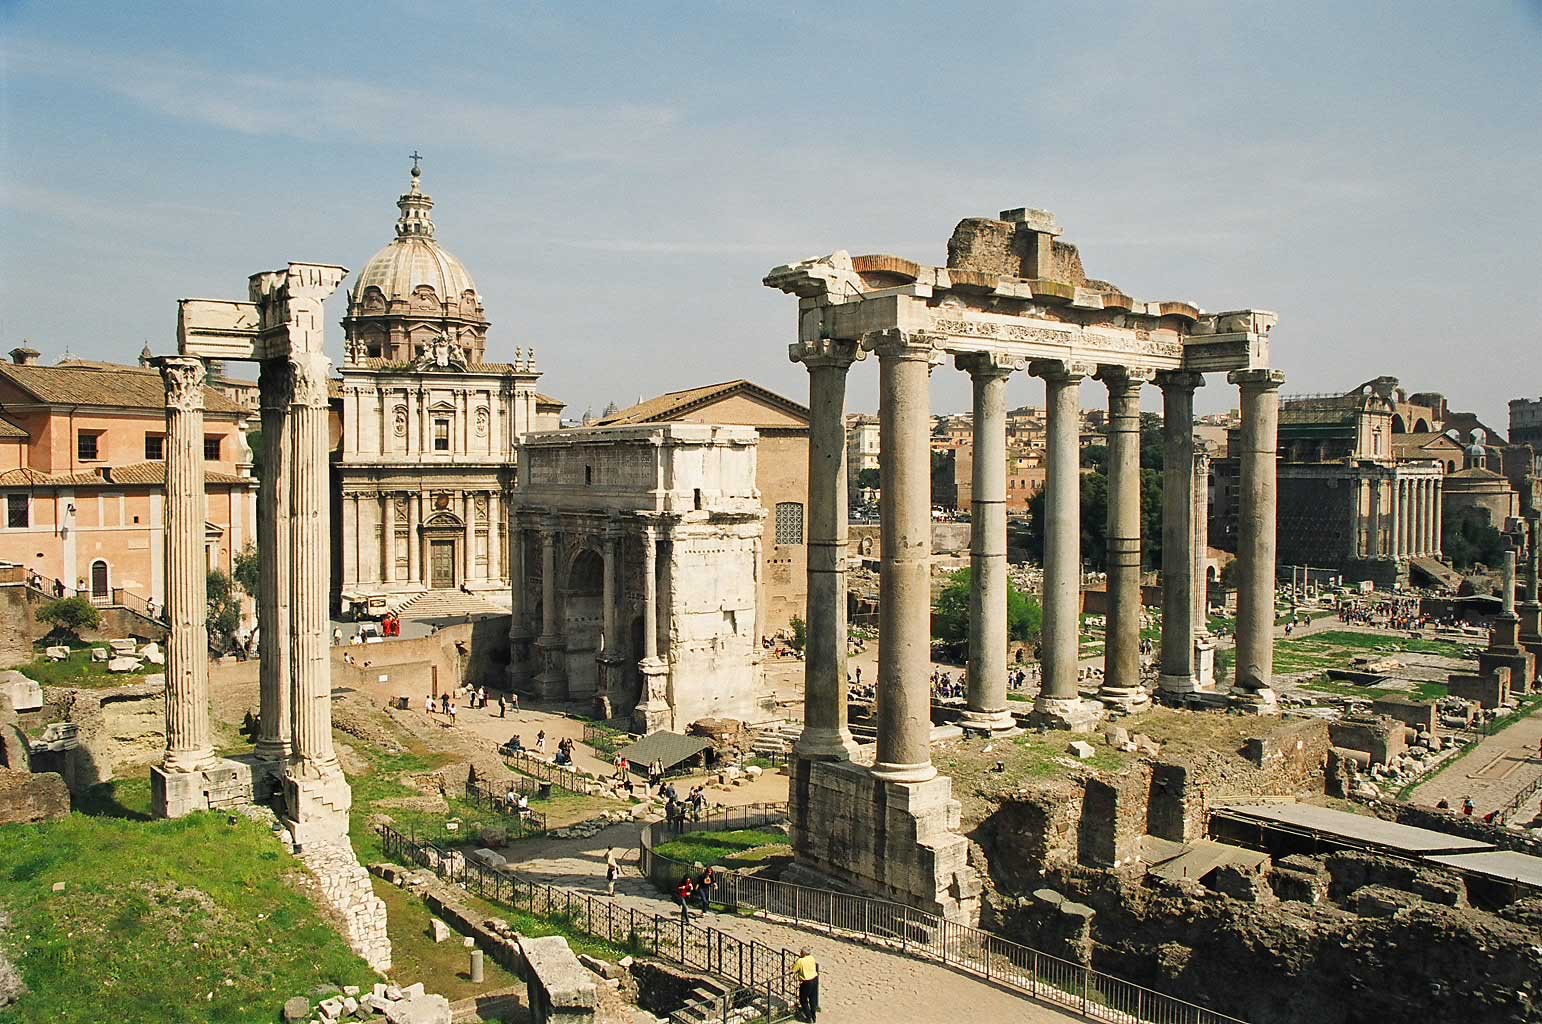 Hd Wallpapers Ancient Roman Colosseum Rome 2560 X 1600 738 Kb Jpeg